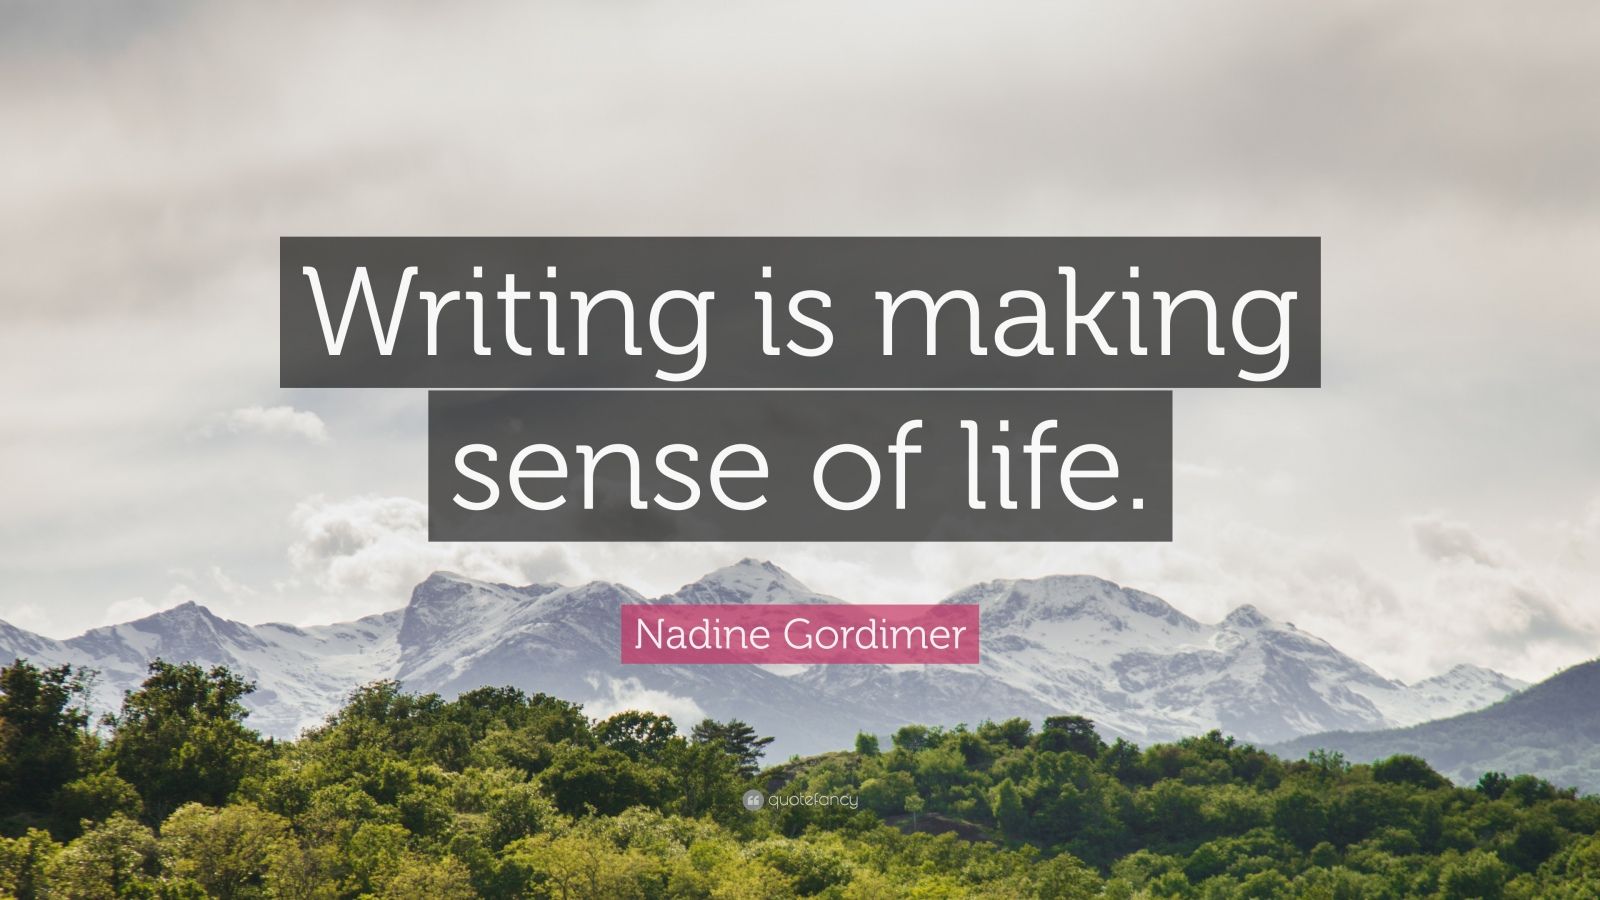 Nadine Gordimer Quote “Writing is making sense of life ”